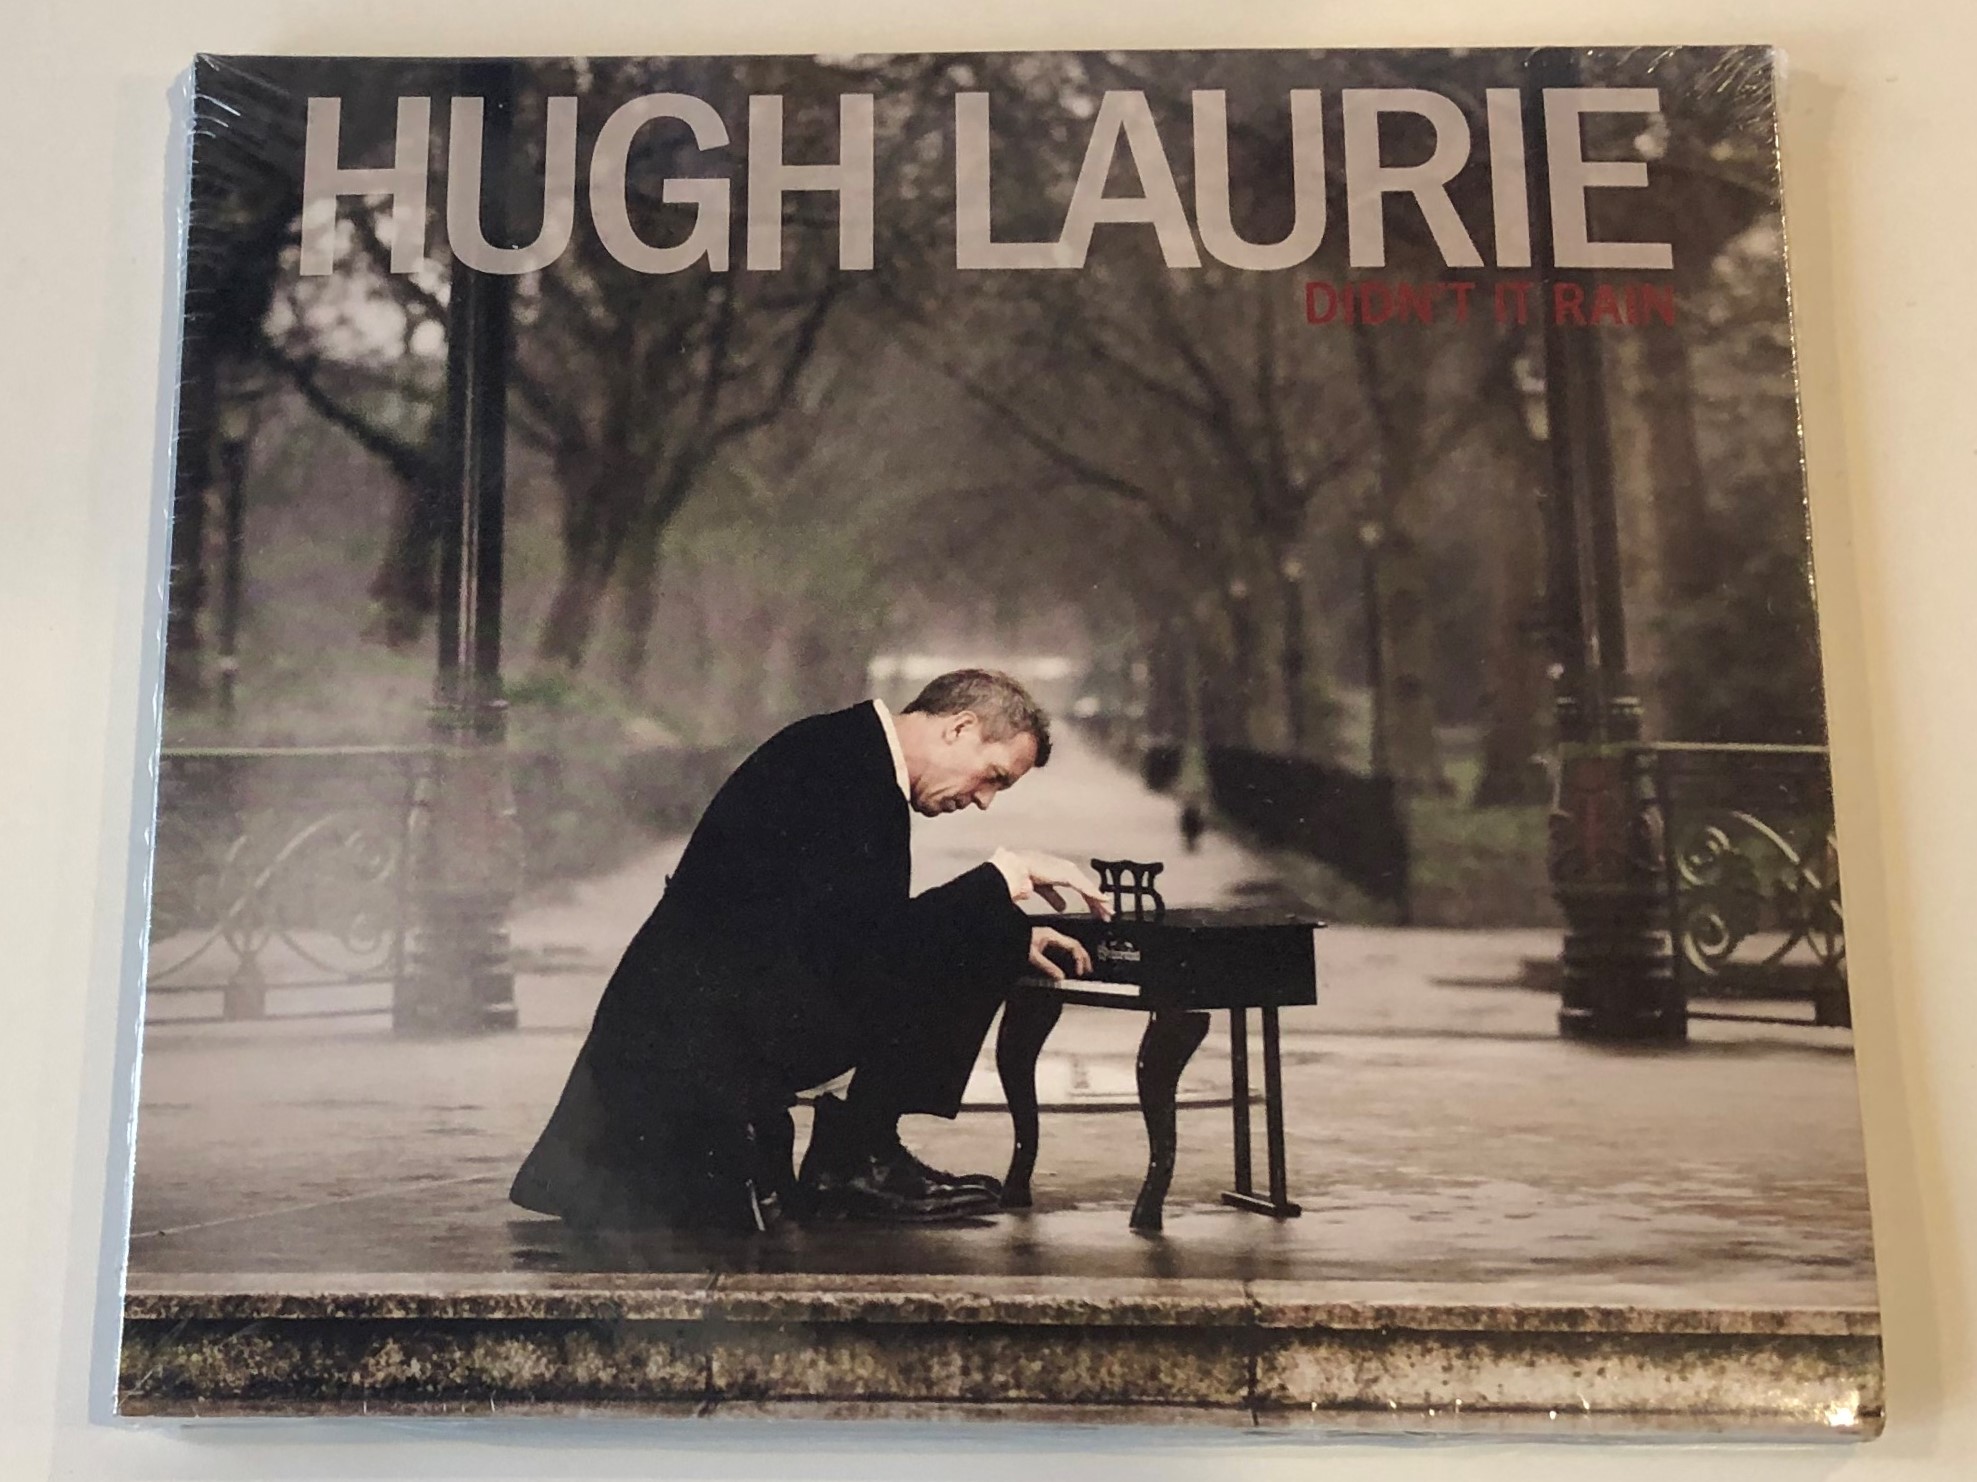 hugh-laurie-didn-t-it-rain-warner-music-entertainment-audio-cd-2013-5053105713721-1-.jpg